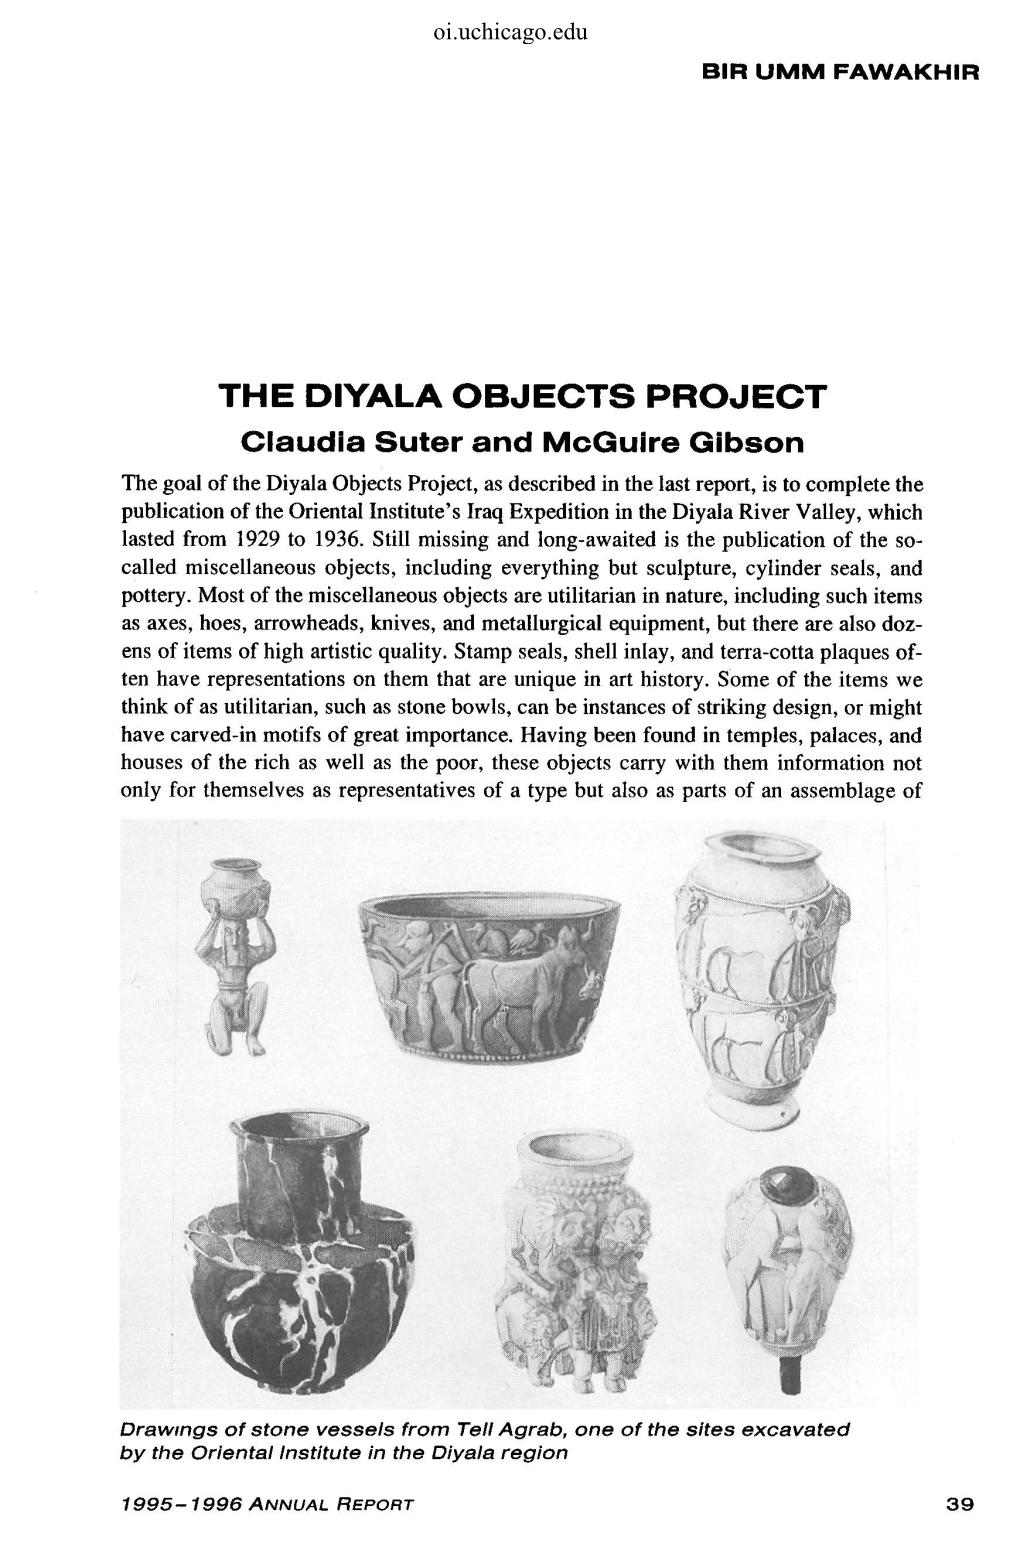 The Diyala Objects Project